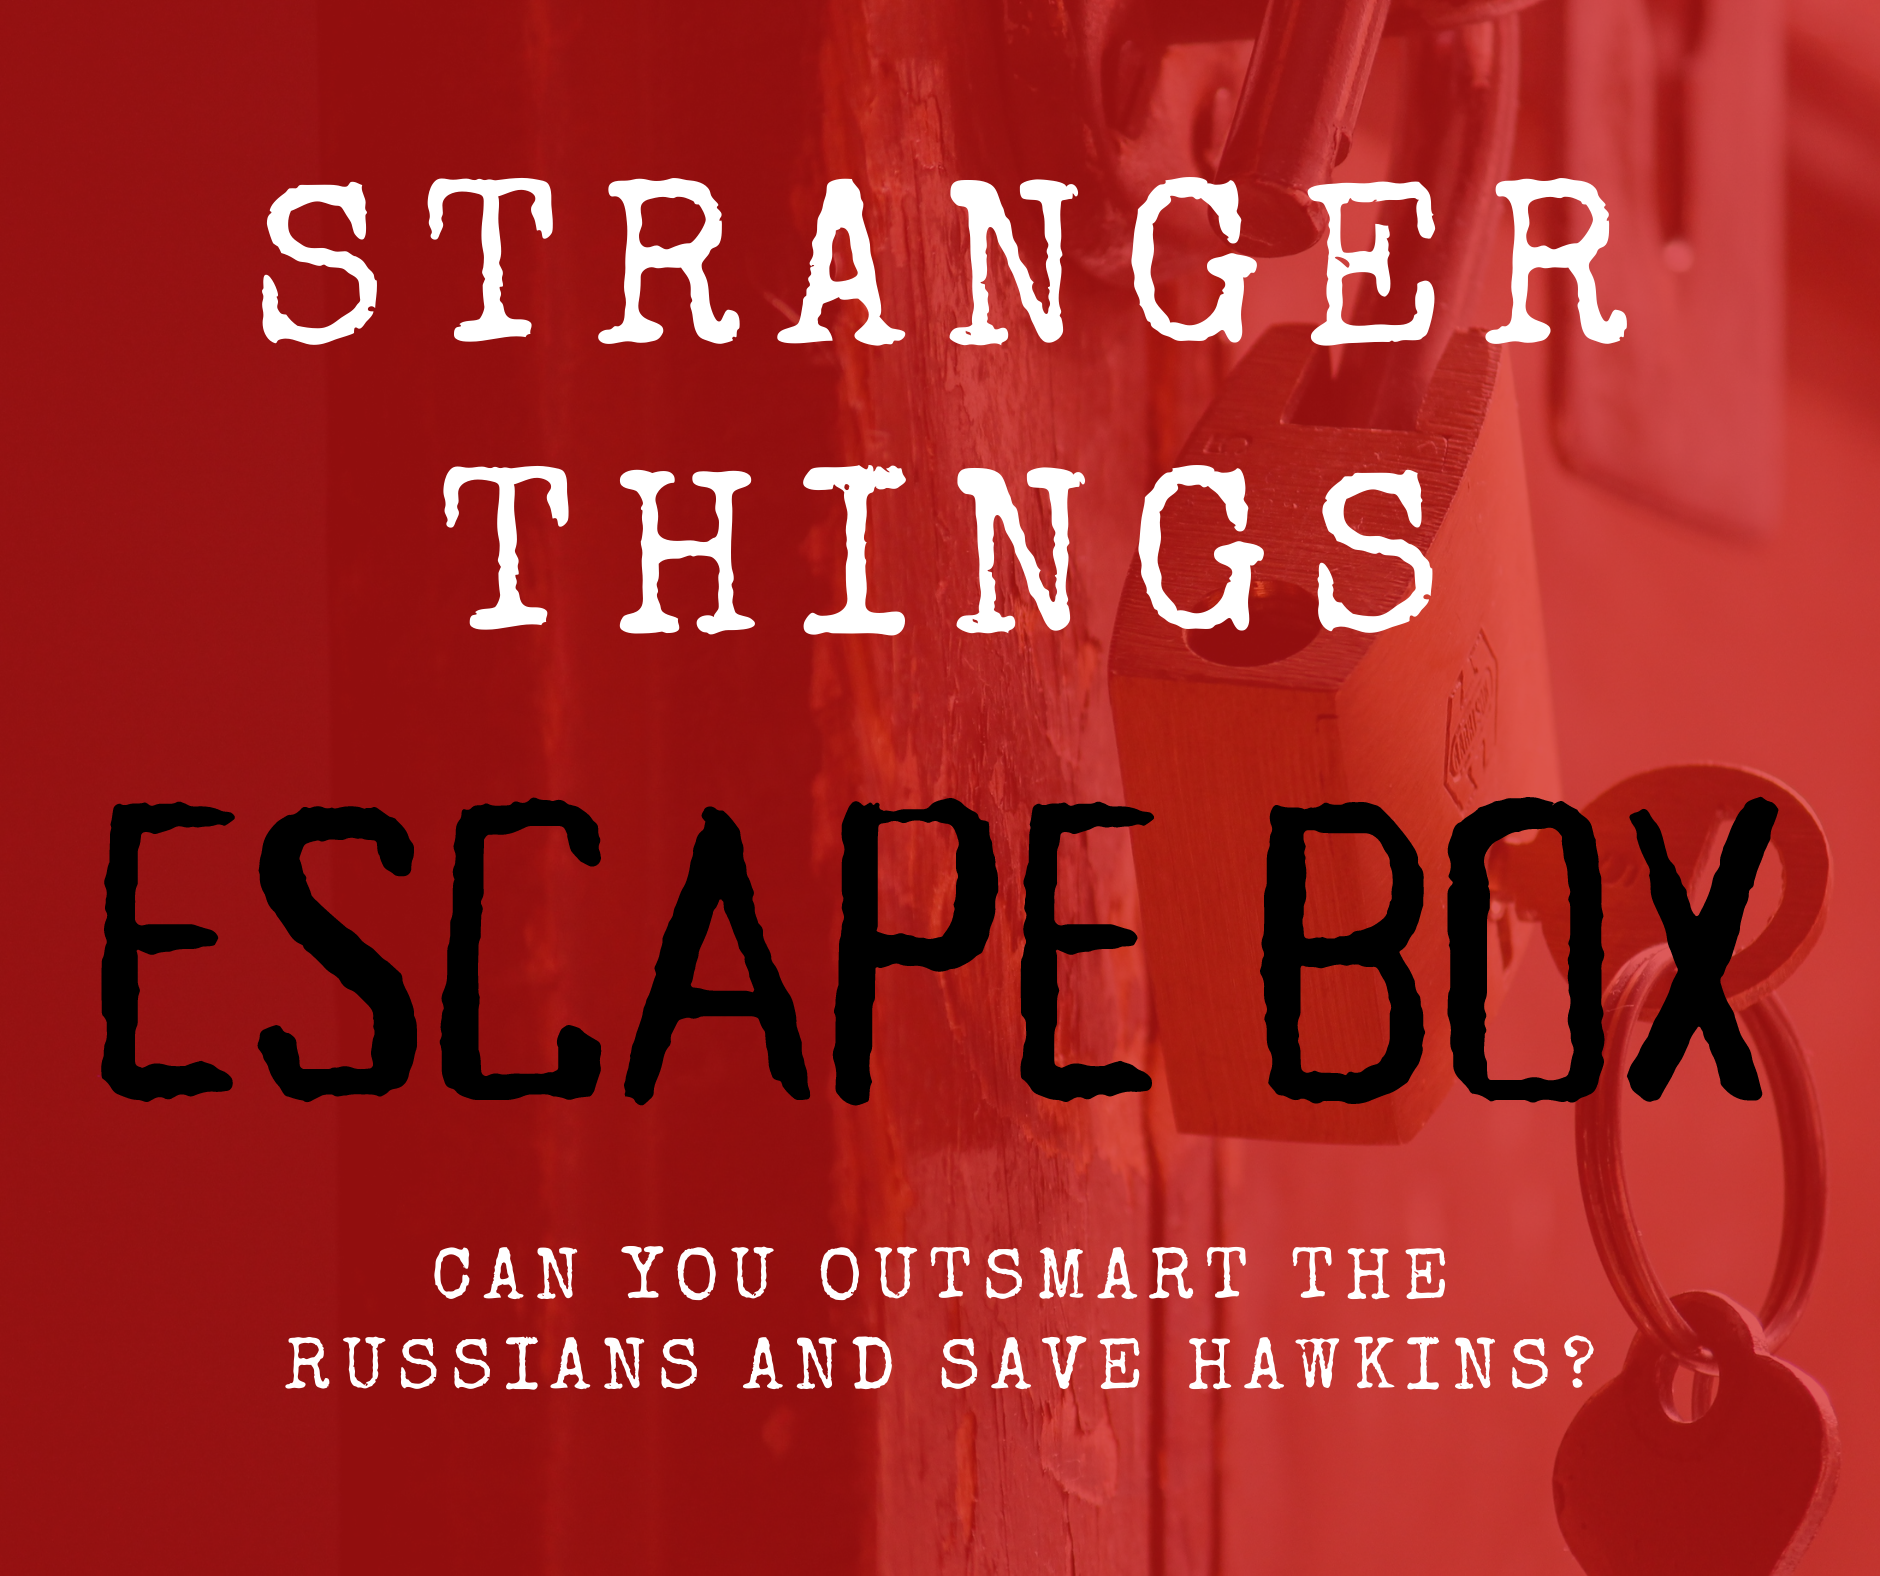 Stranger Things Escape Box